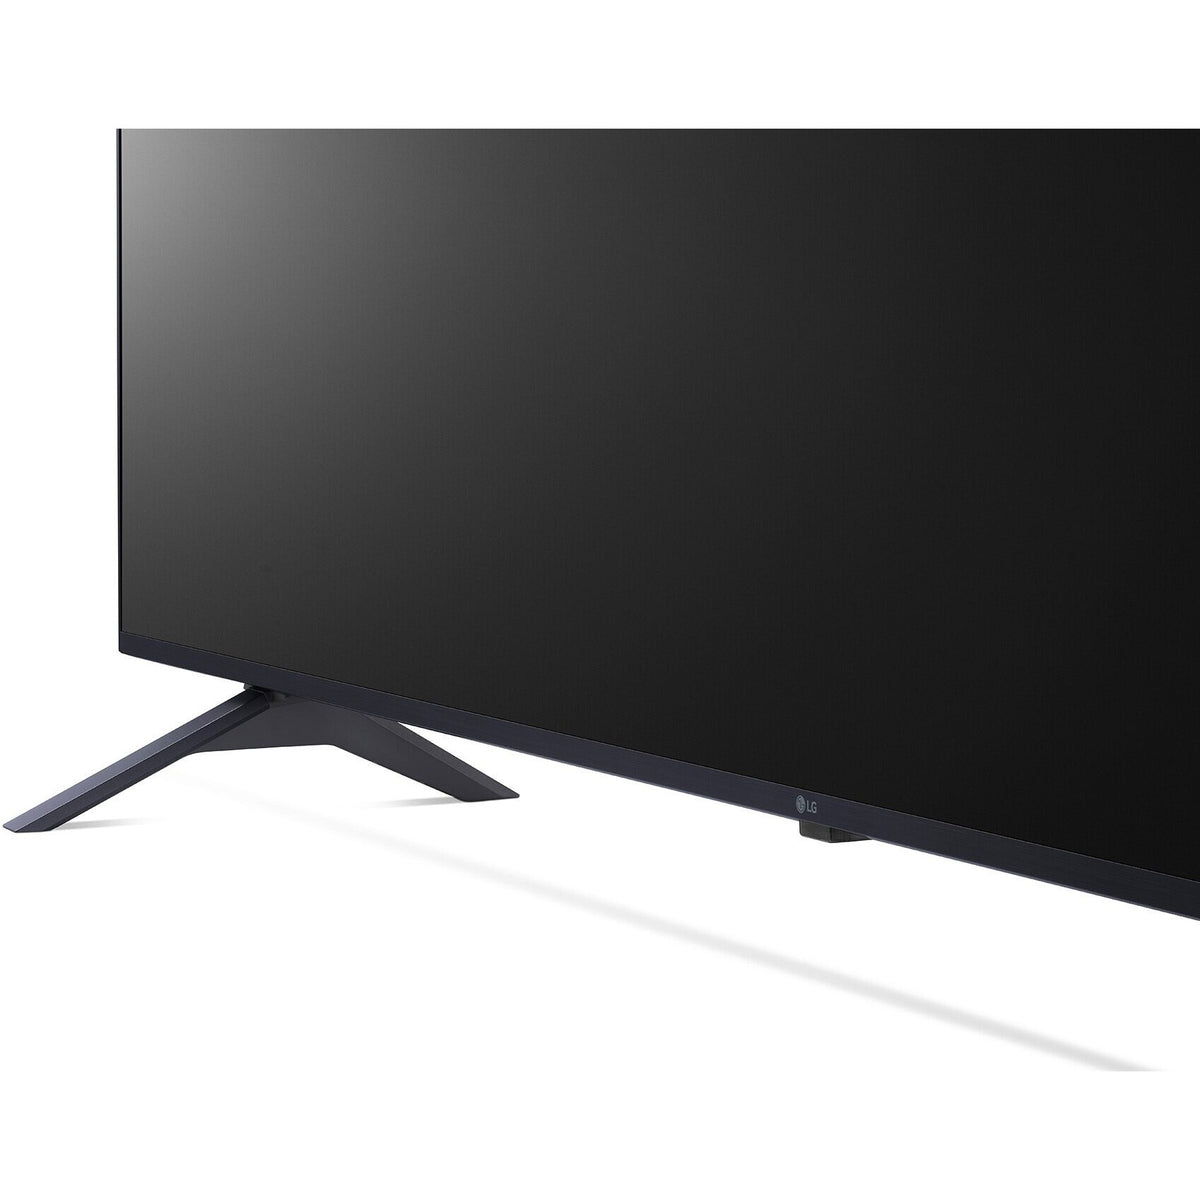 Smart televízor LG 60UP8000 (2021) / 60&quot; (153 cm)